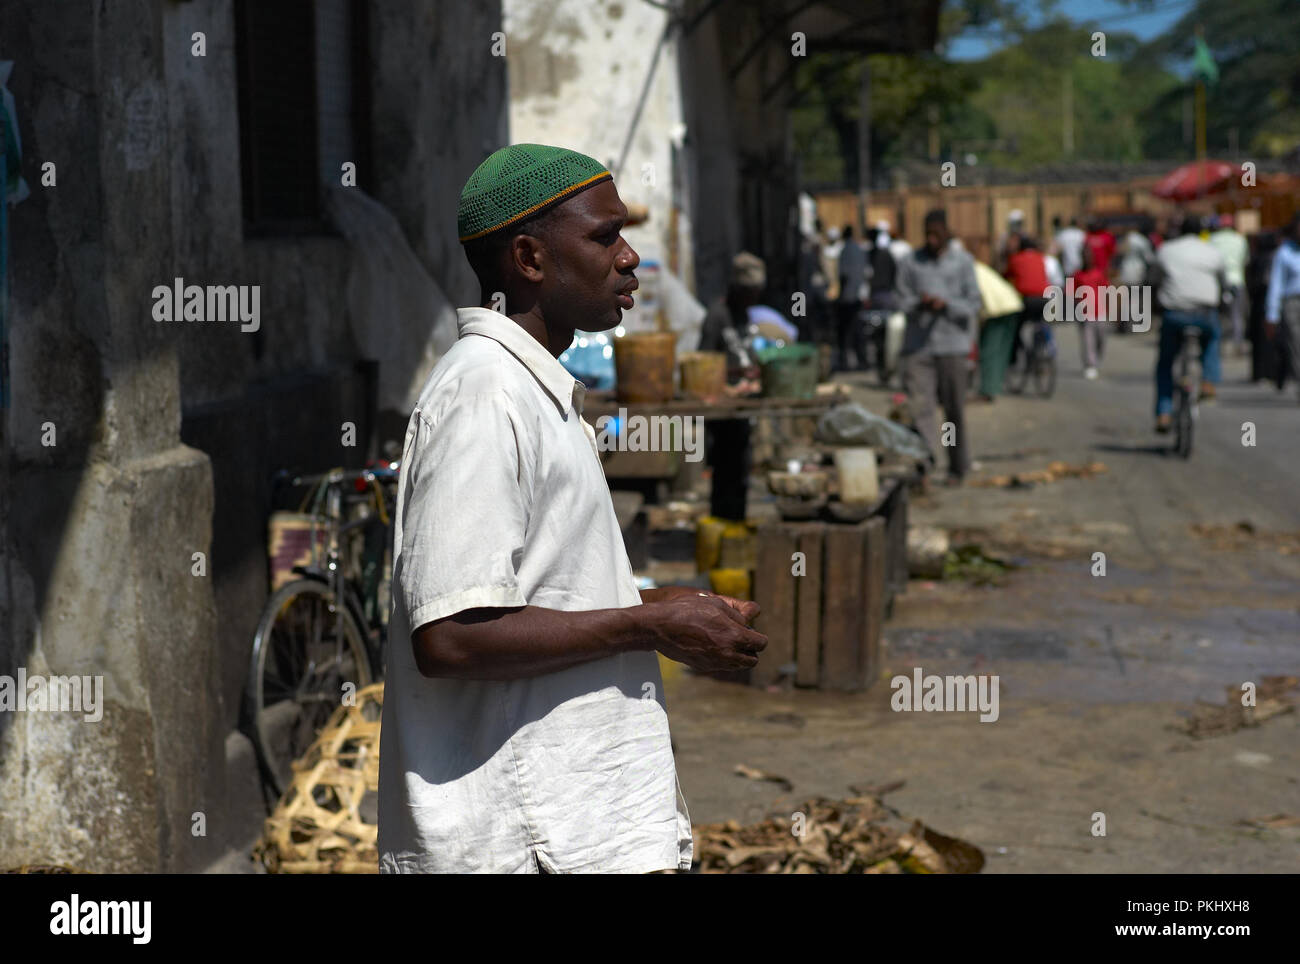 STONE Town, Sansibar, Tansania - 06. JULI 2008: Ein lokaler Mann hinter dem Fisch Markt in Stone Town, Sansibar, Tansania warten. Stockfoto